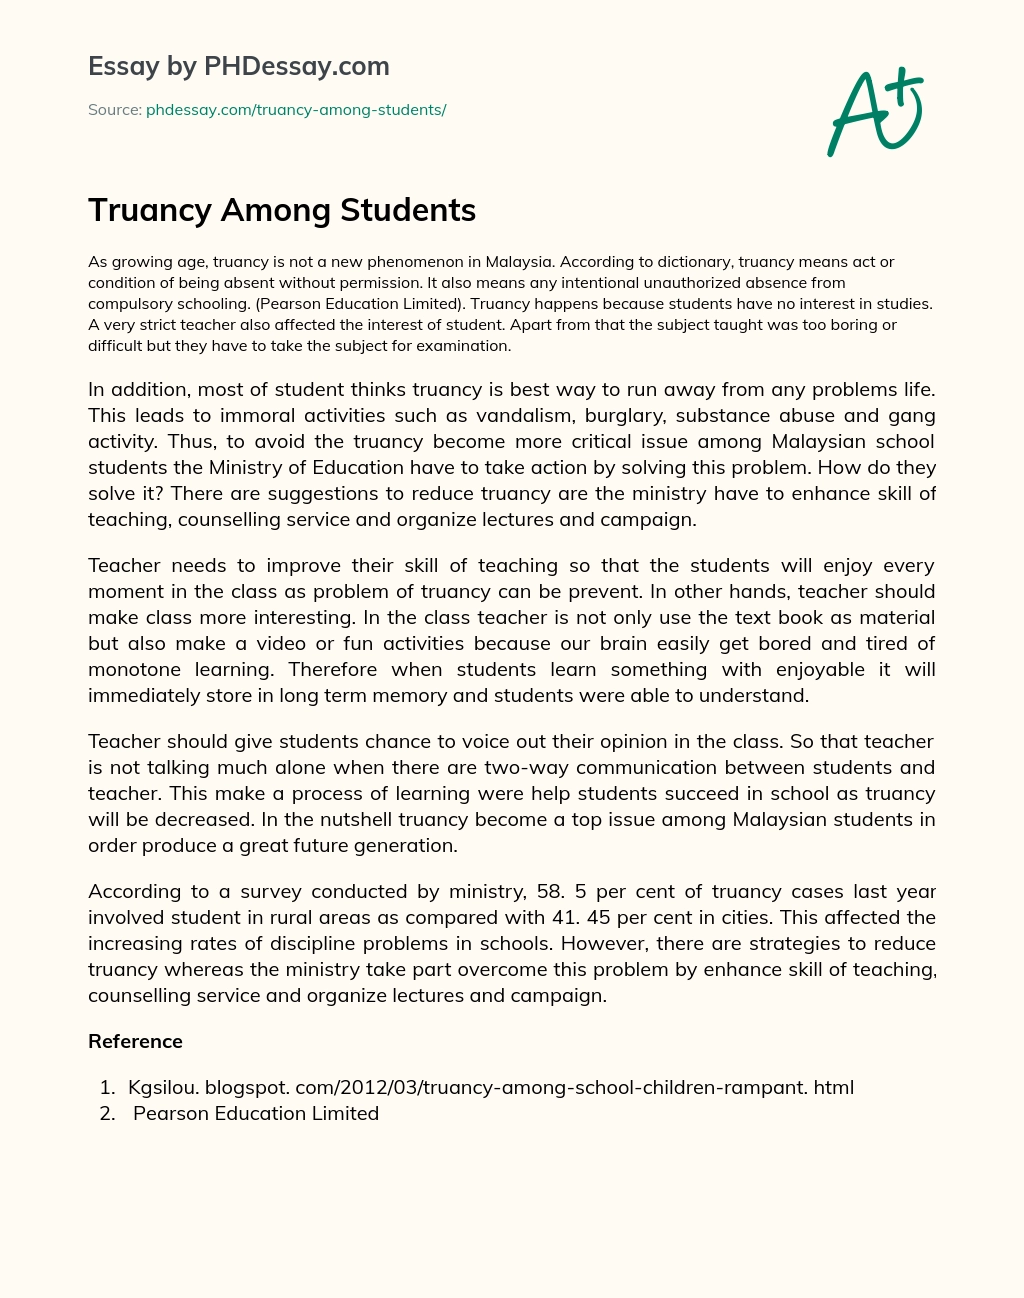 Truancy Among Students essay